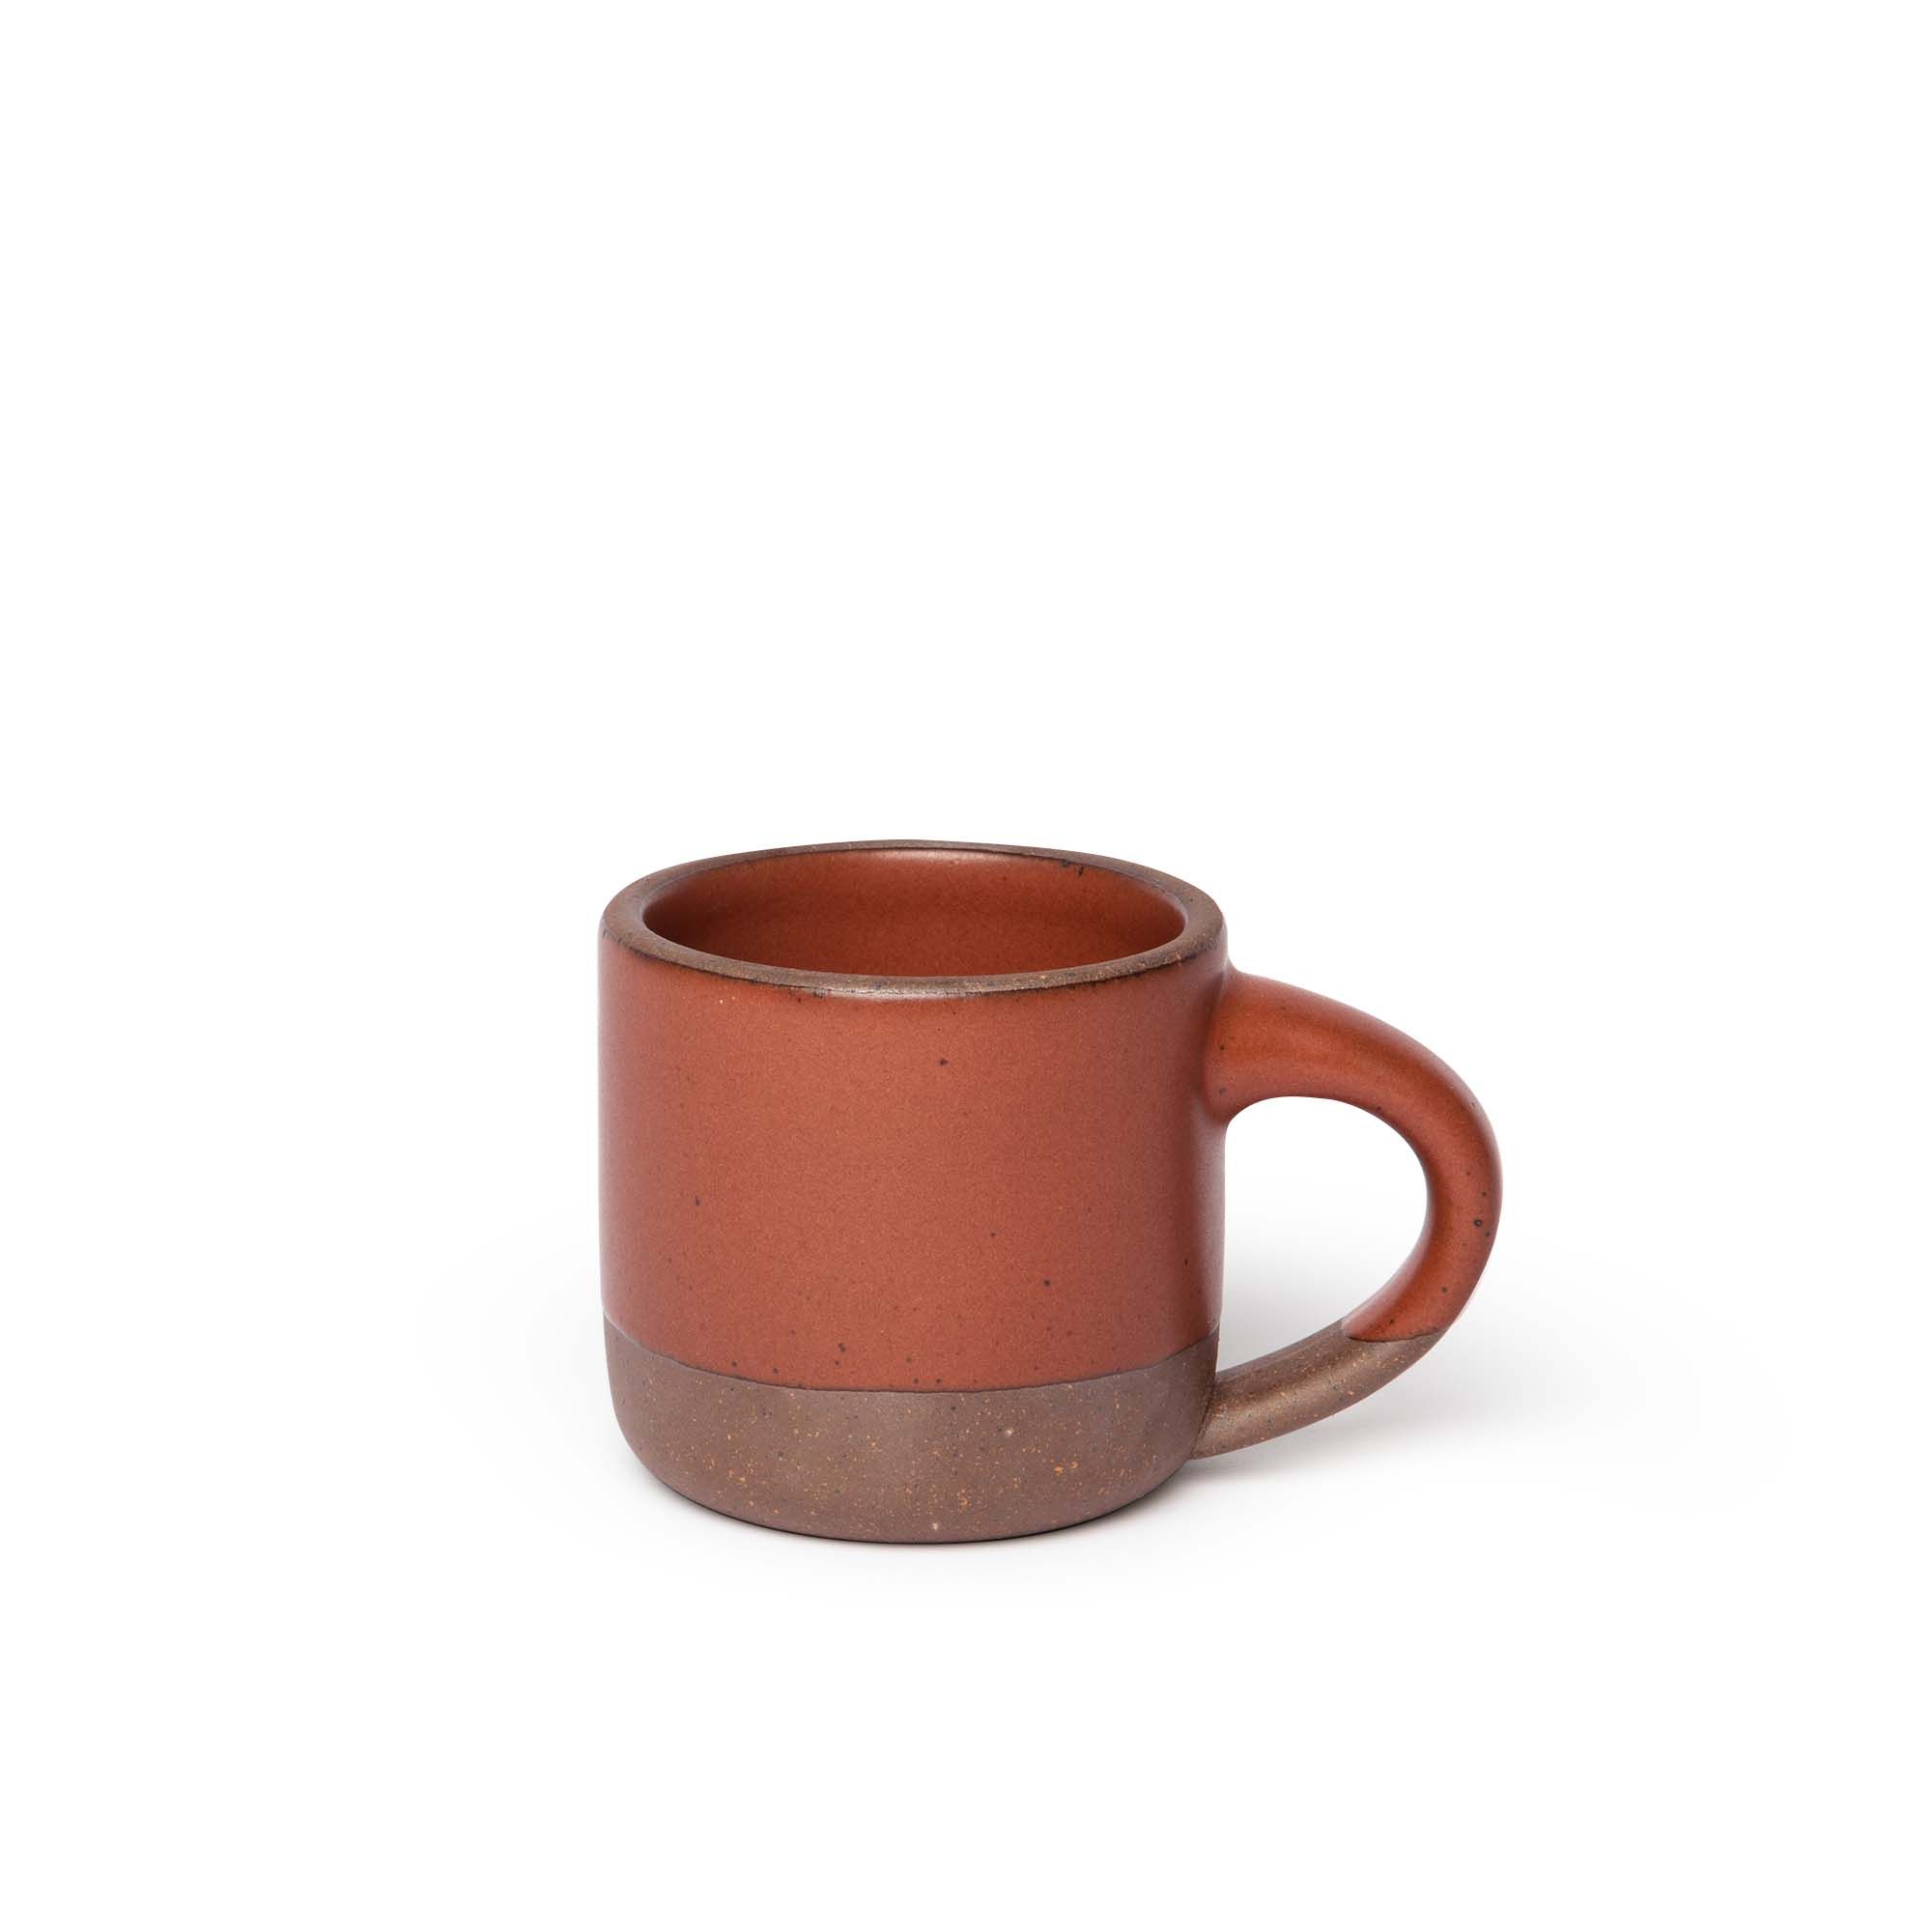 The Small Mug in Amaro